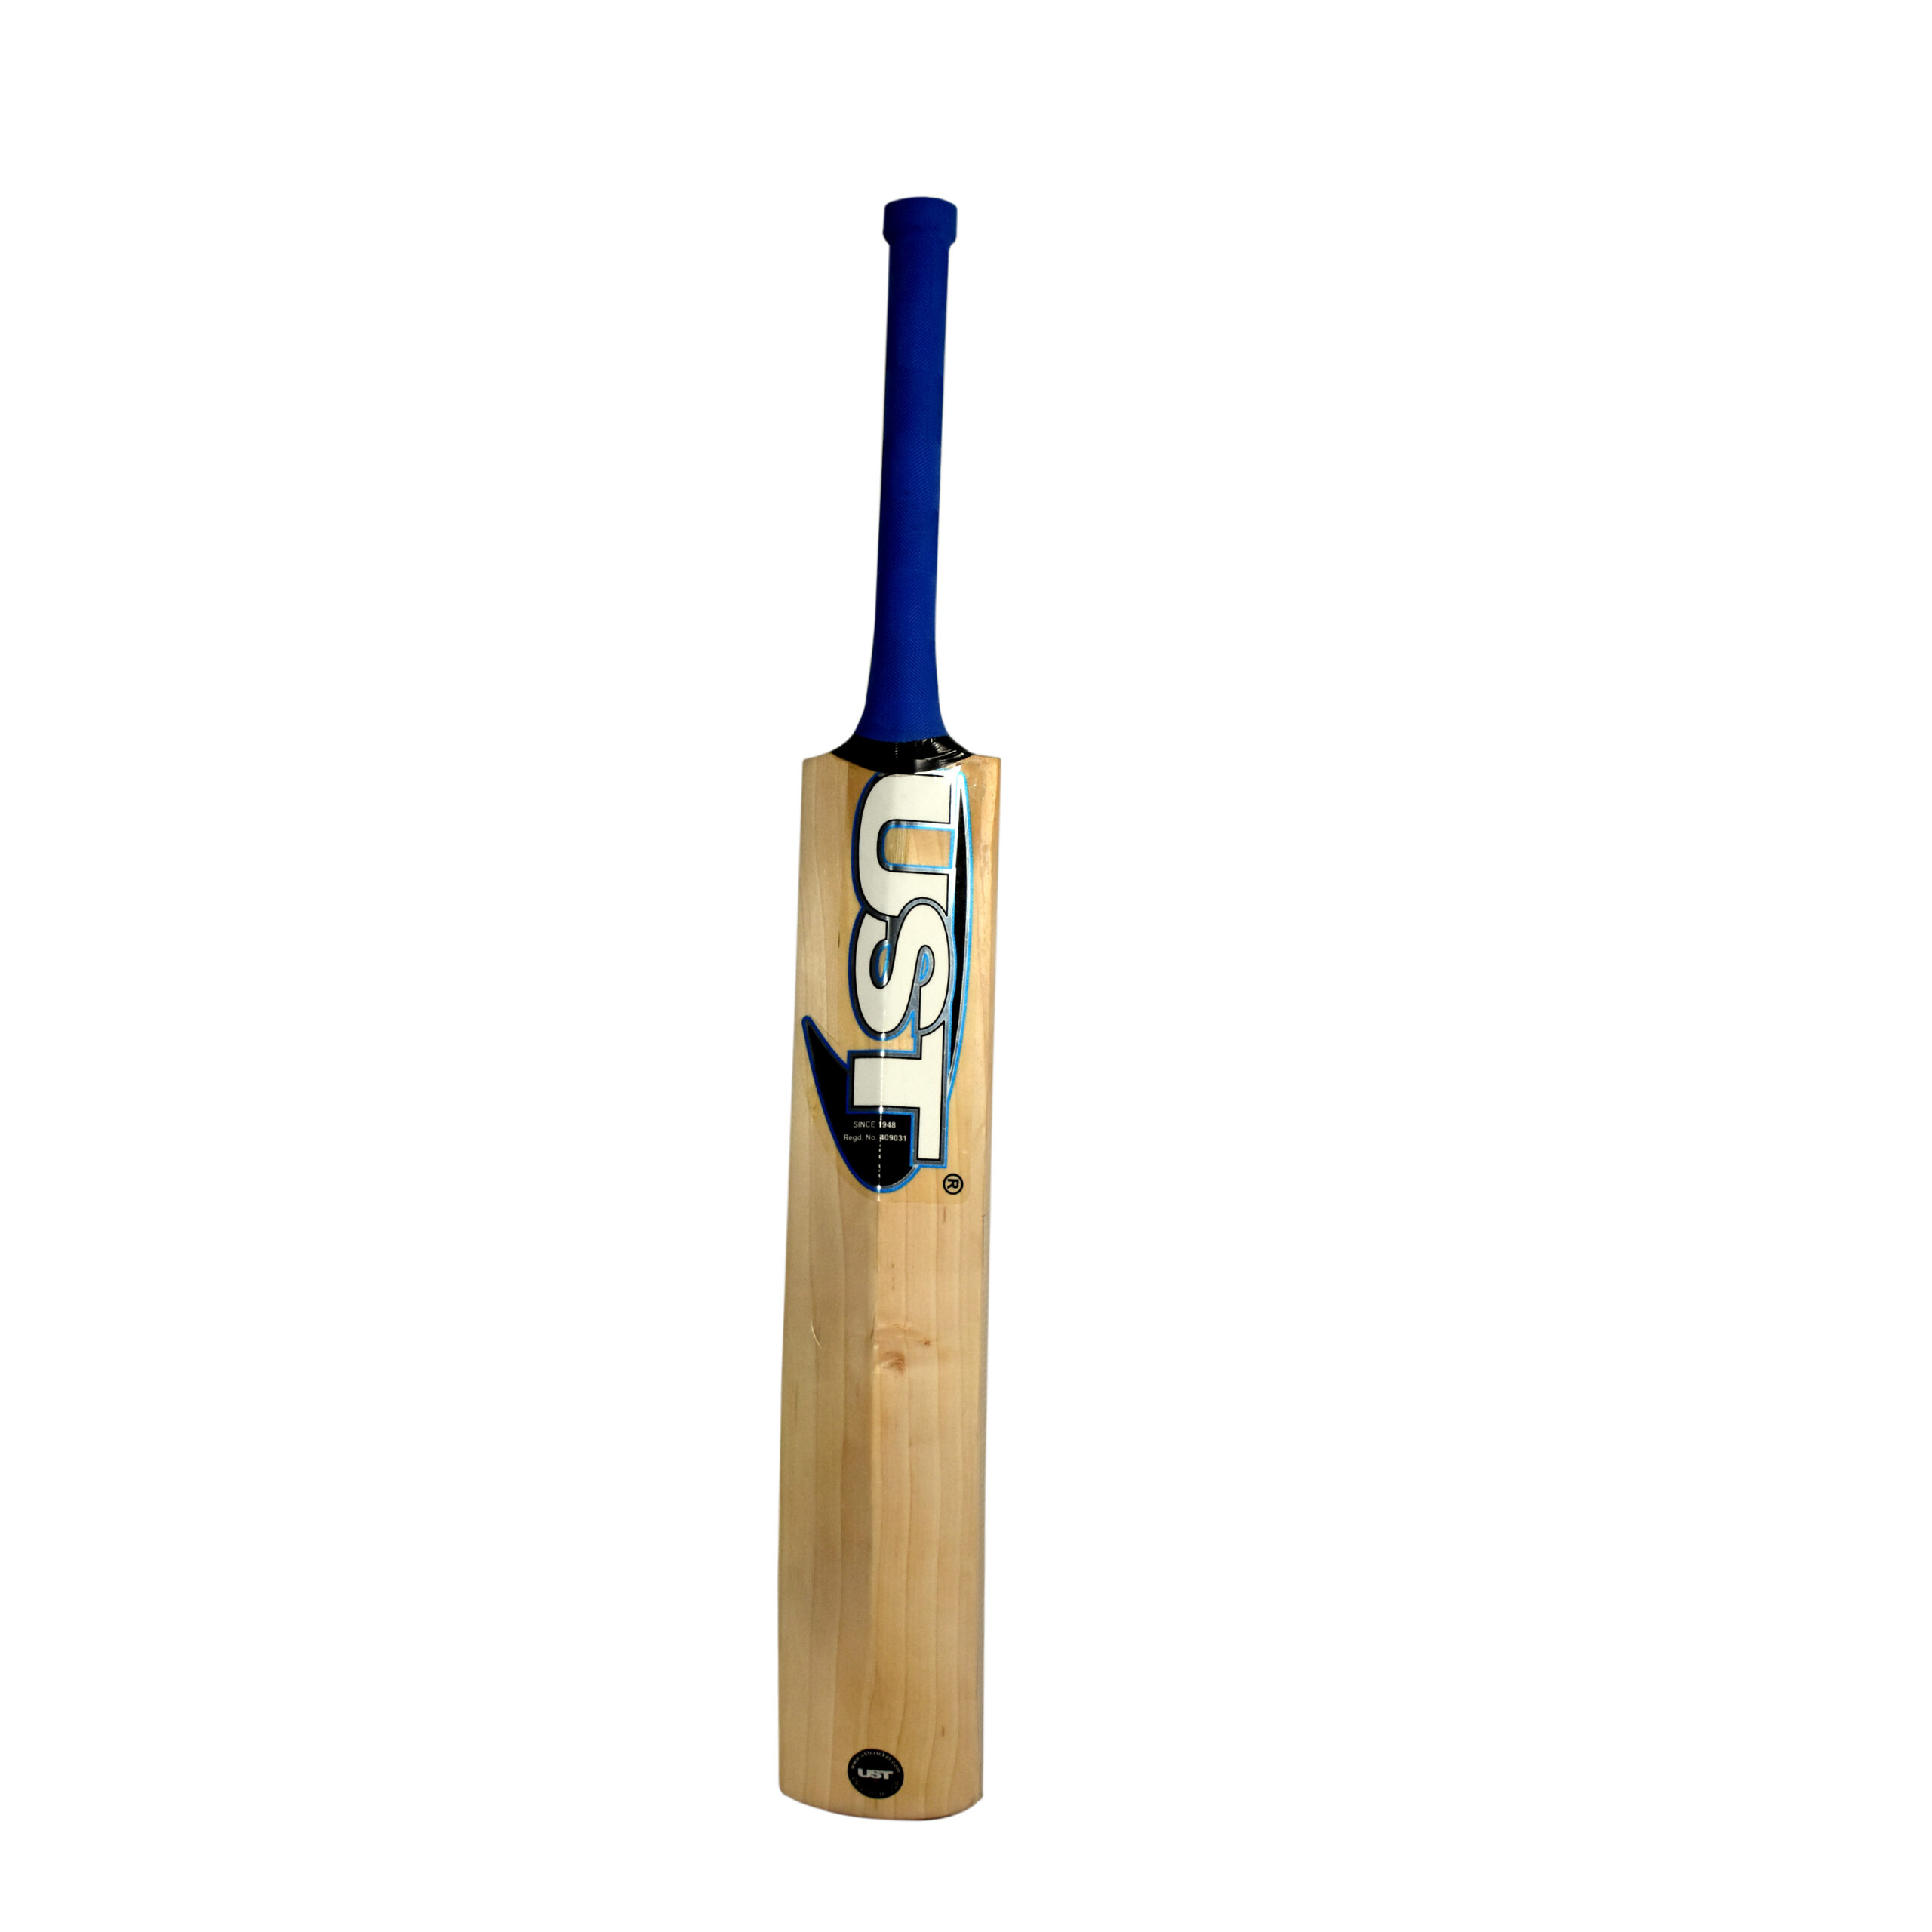 English Willow Cricket Bat Full Size Cricket Bat with 1 Handel Gripe & Bat Cover 